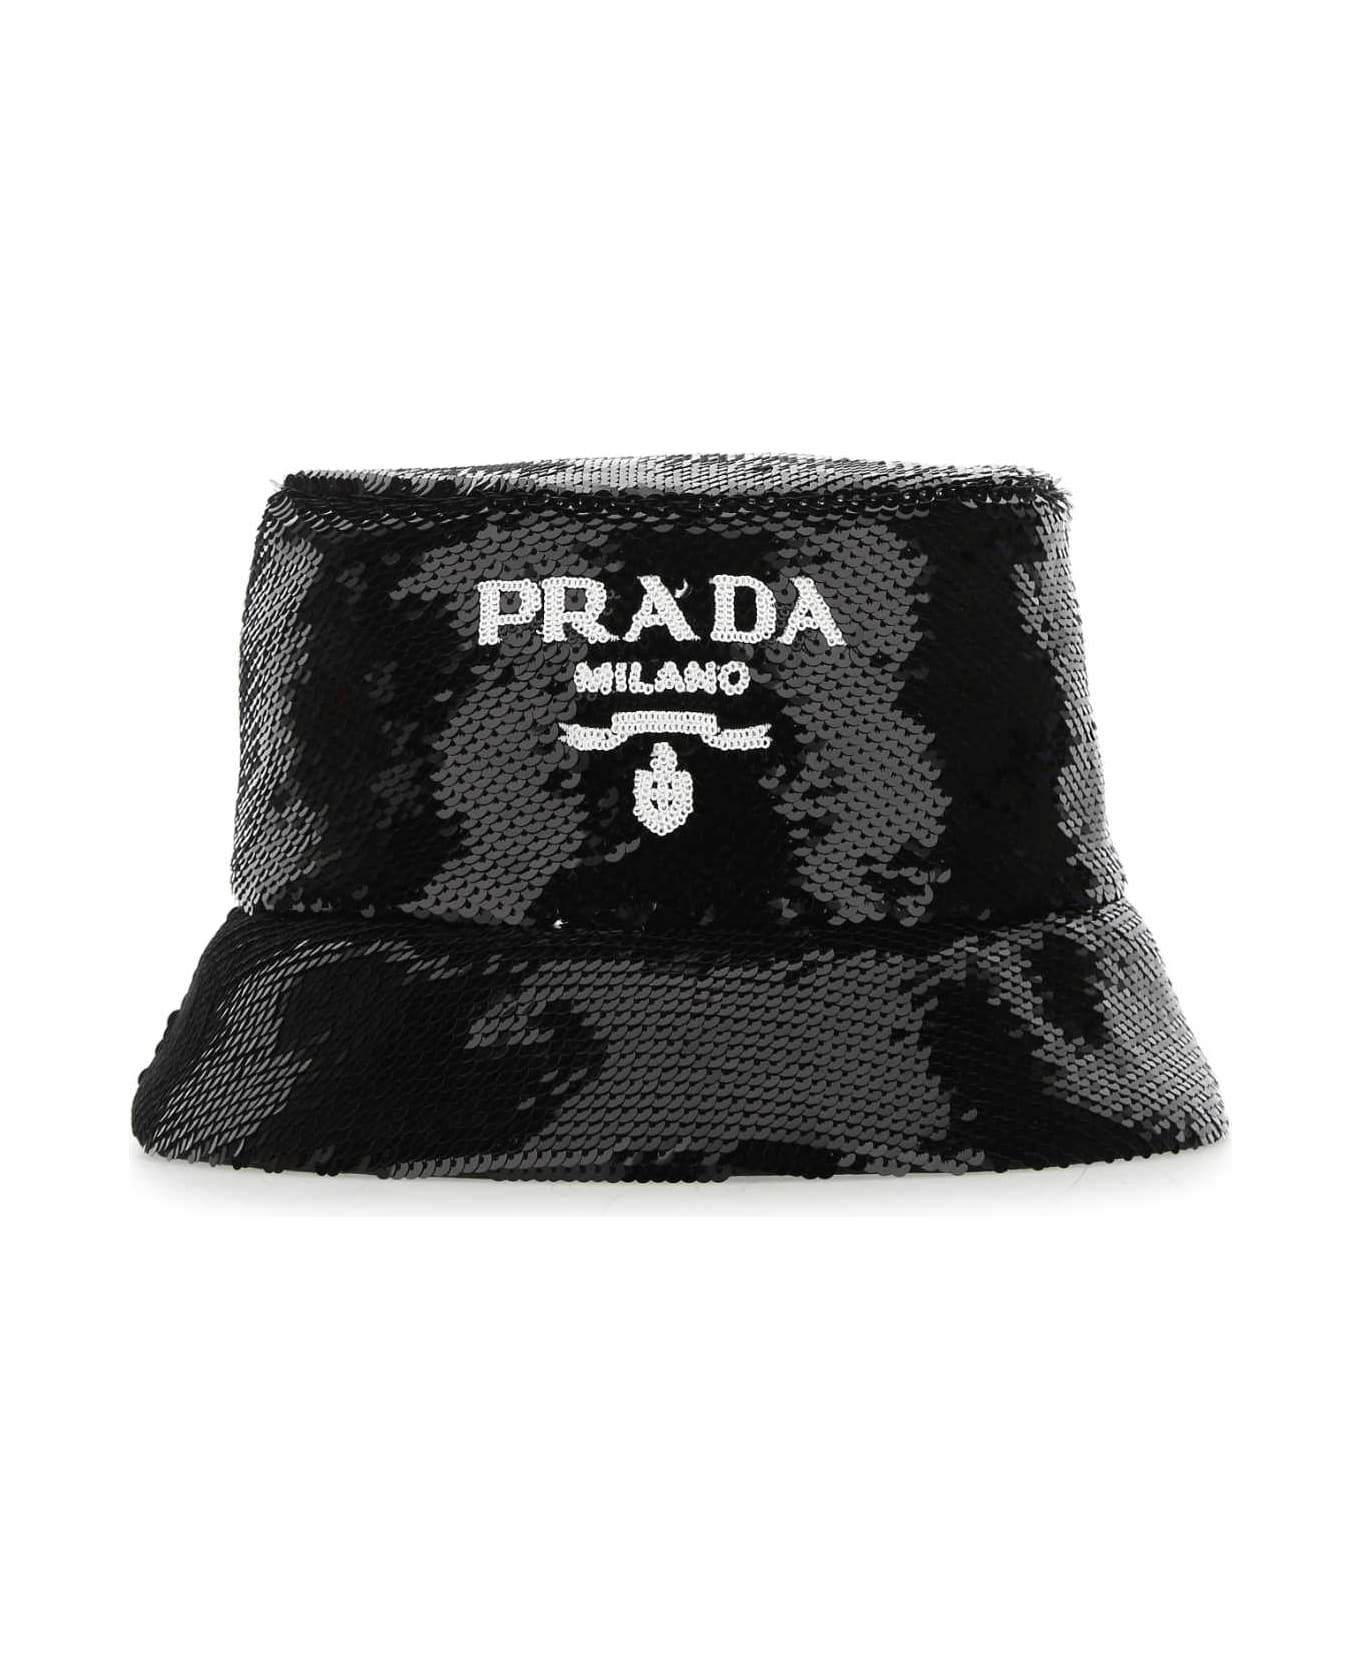 Prada Black Sequins Bucket Hat - F0967 ヘアアクセサリー